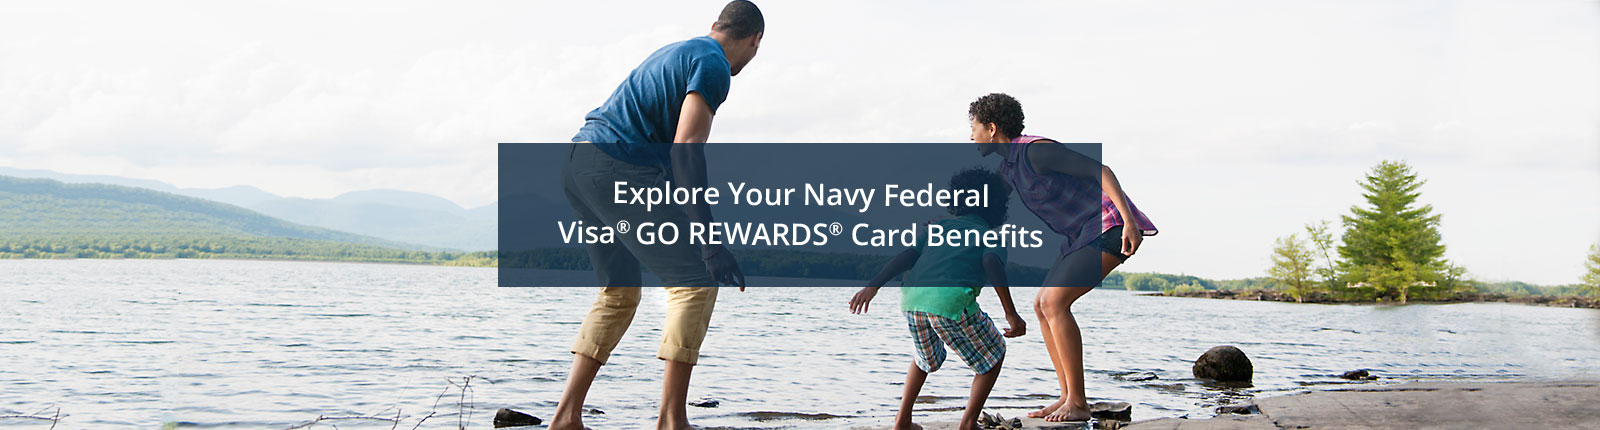 Explore Your Navy Federal Visa® GO REWARDS® Card Benefits